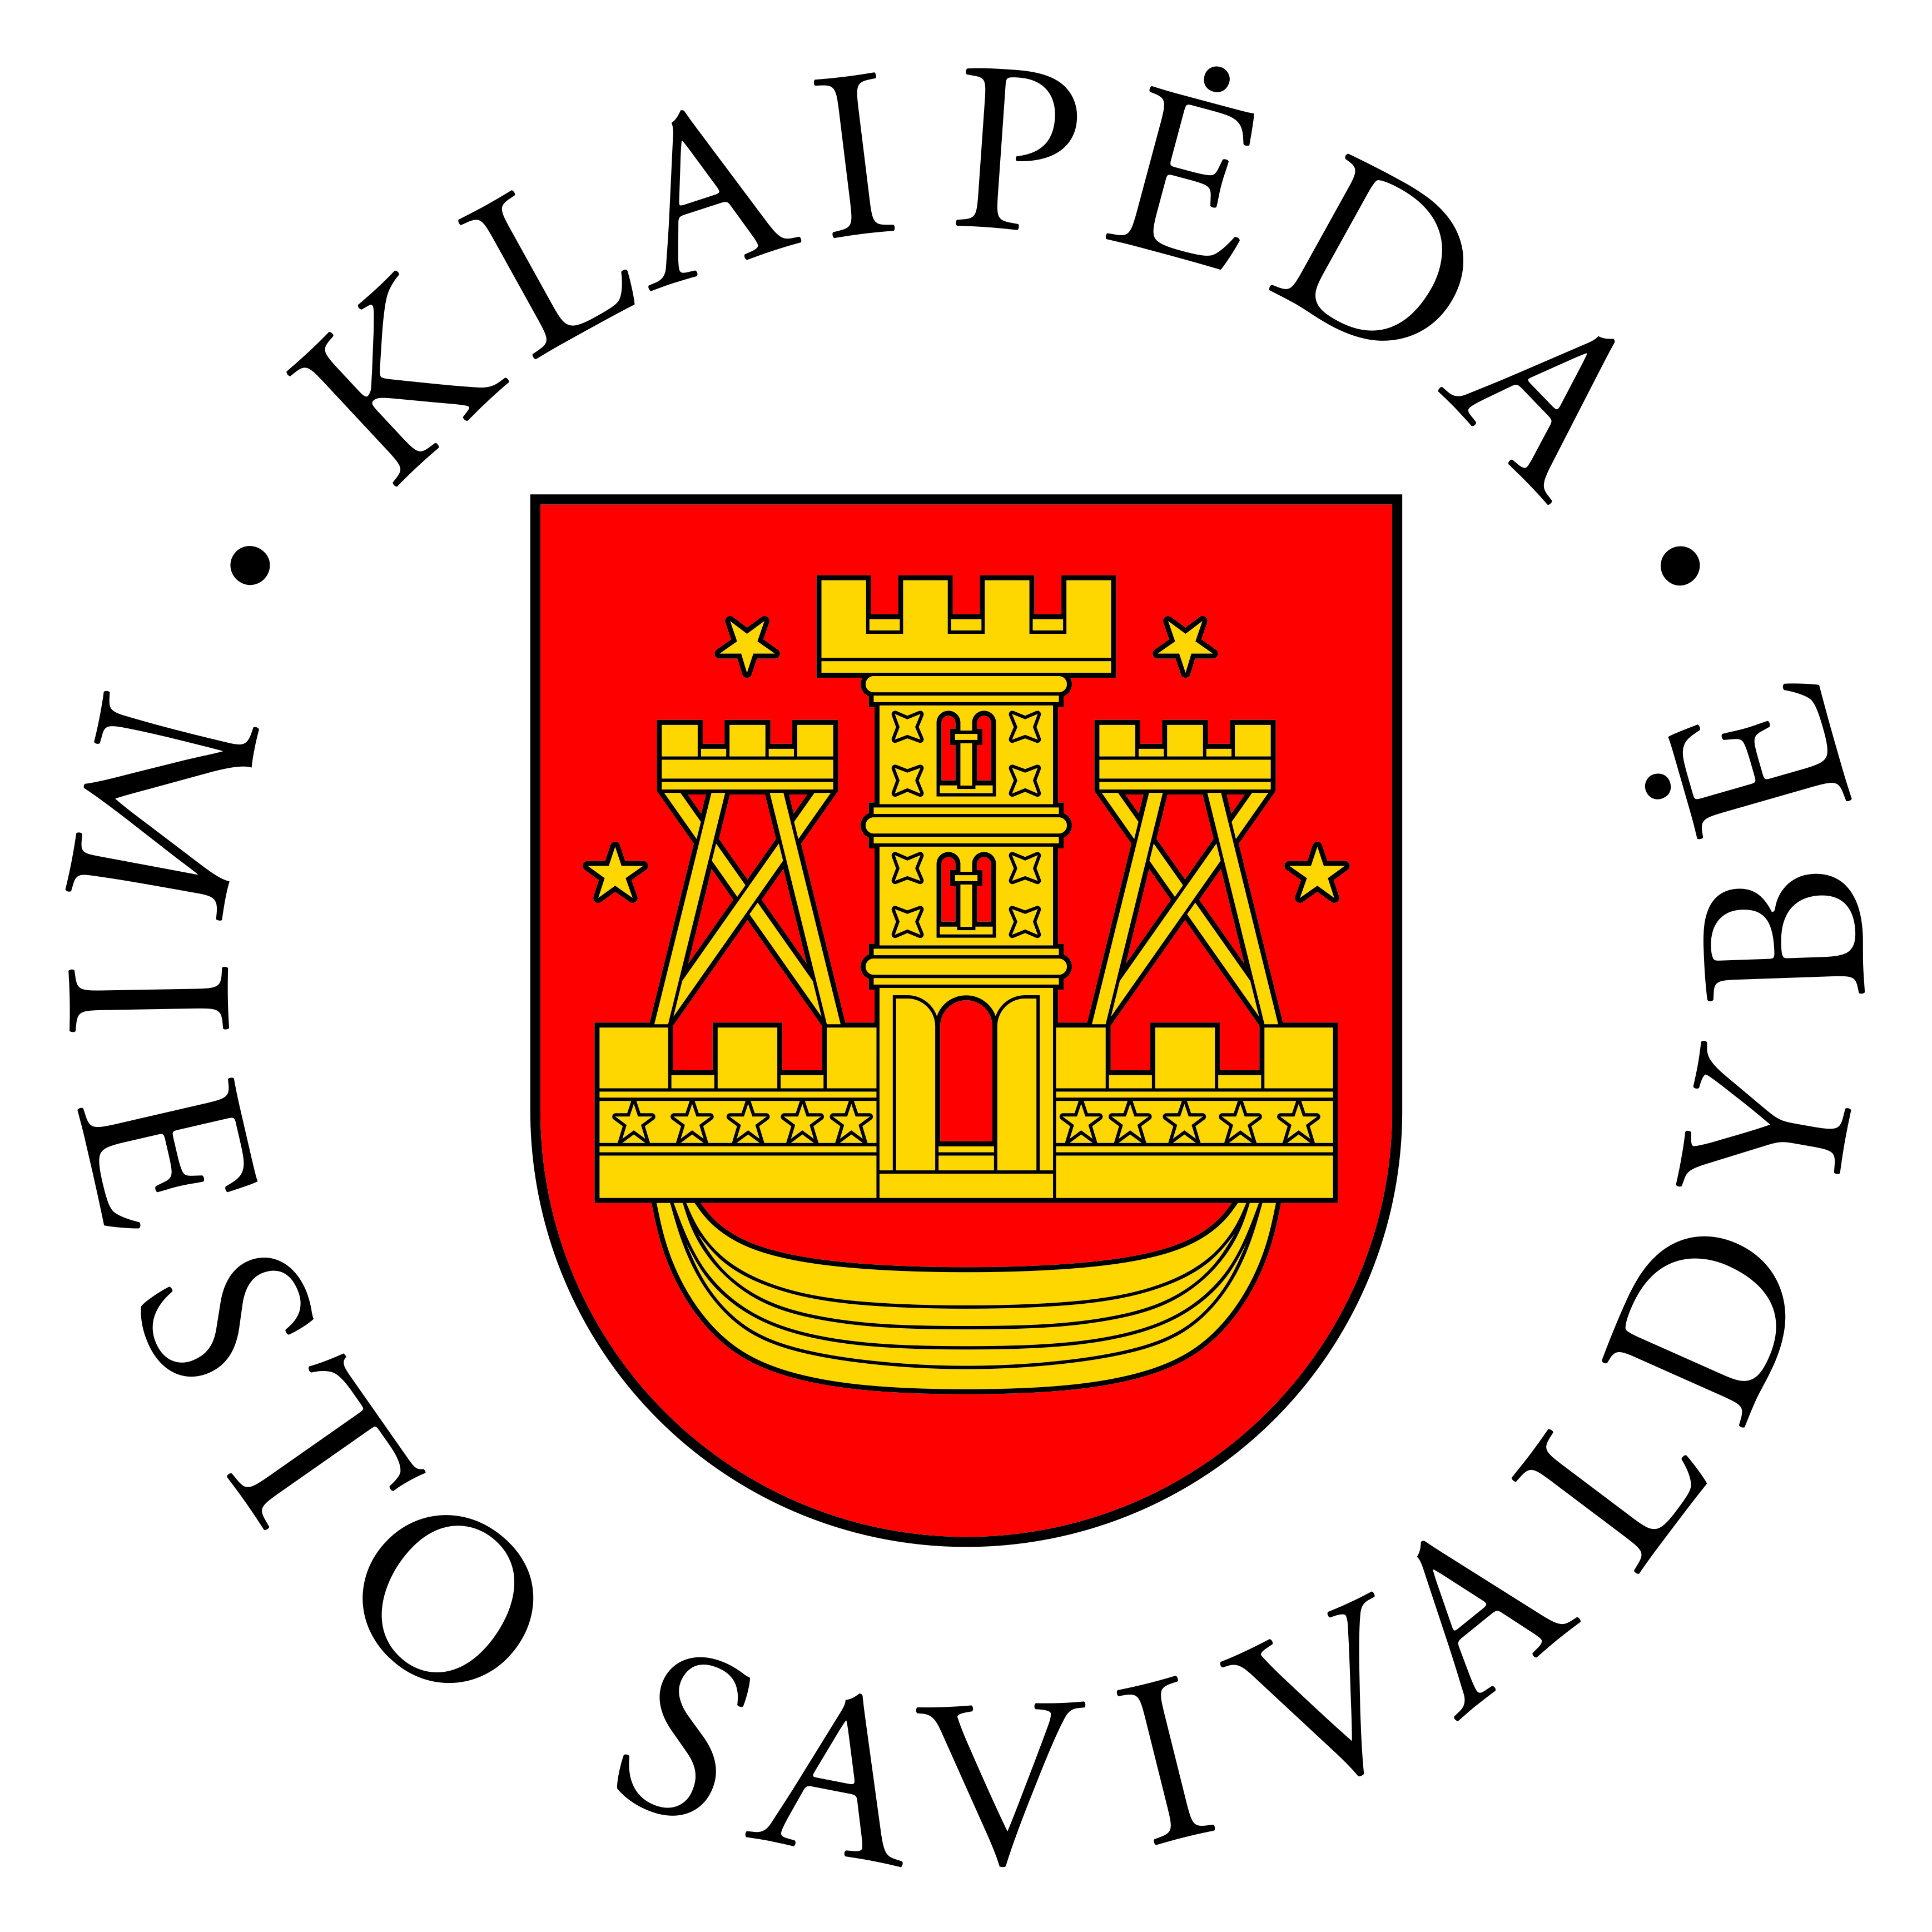 Klaipeda logo